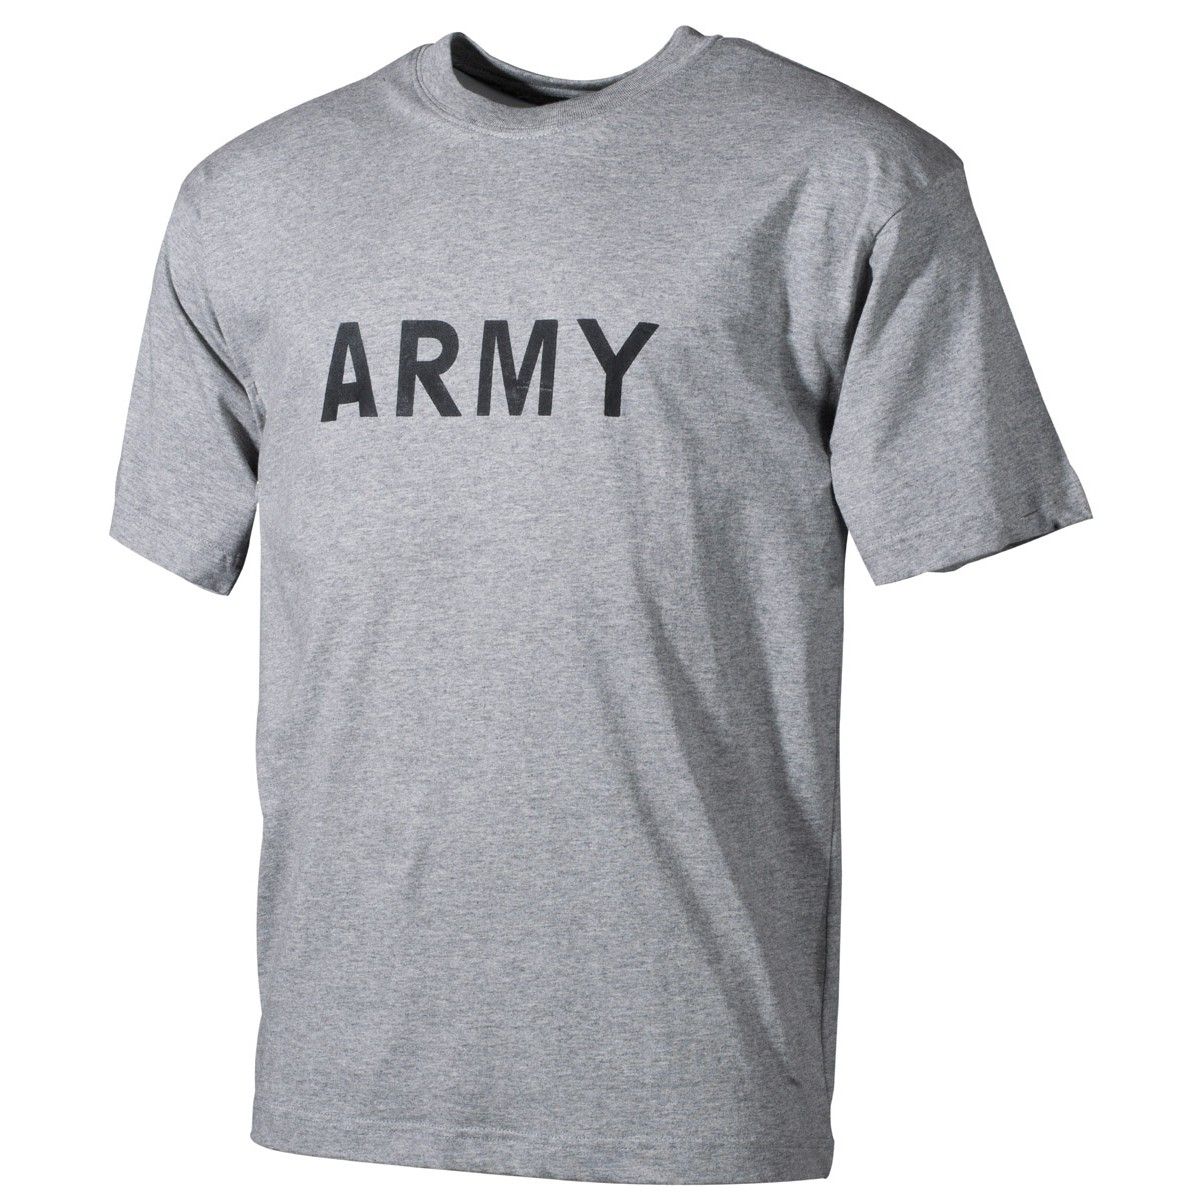 MFH Classic Army T-shirt Vegetato Camo 00103L 